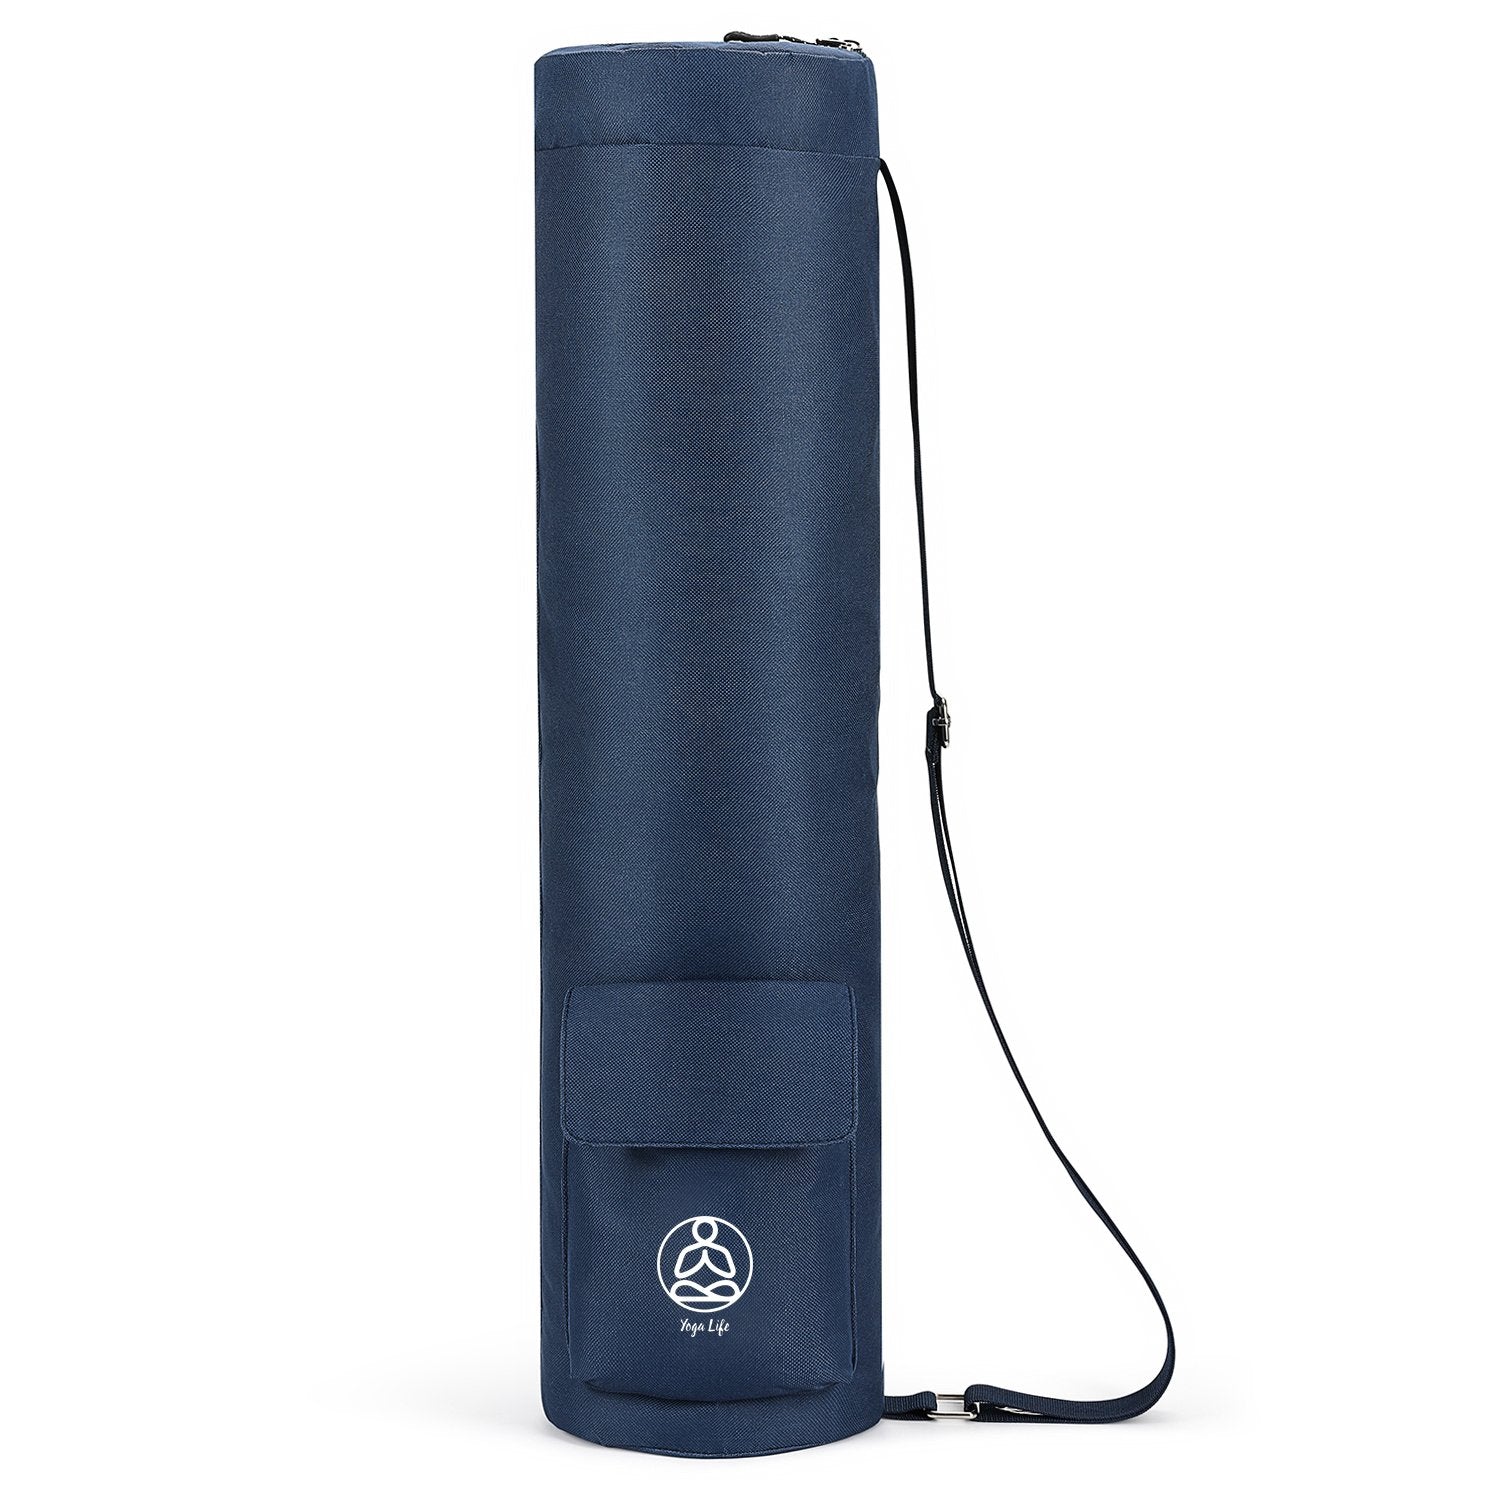  Explore Land Oxford Yoga Mat Storage Bag with